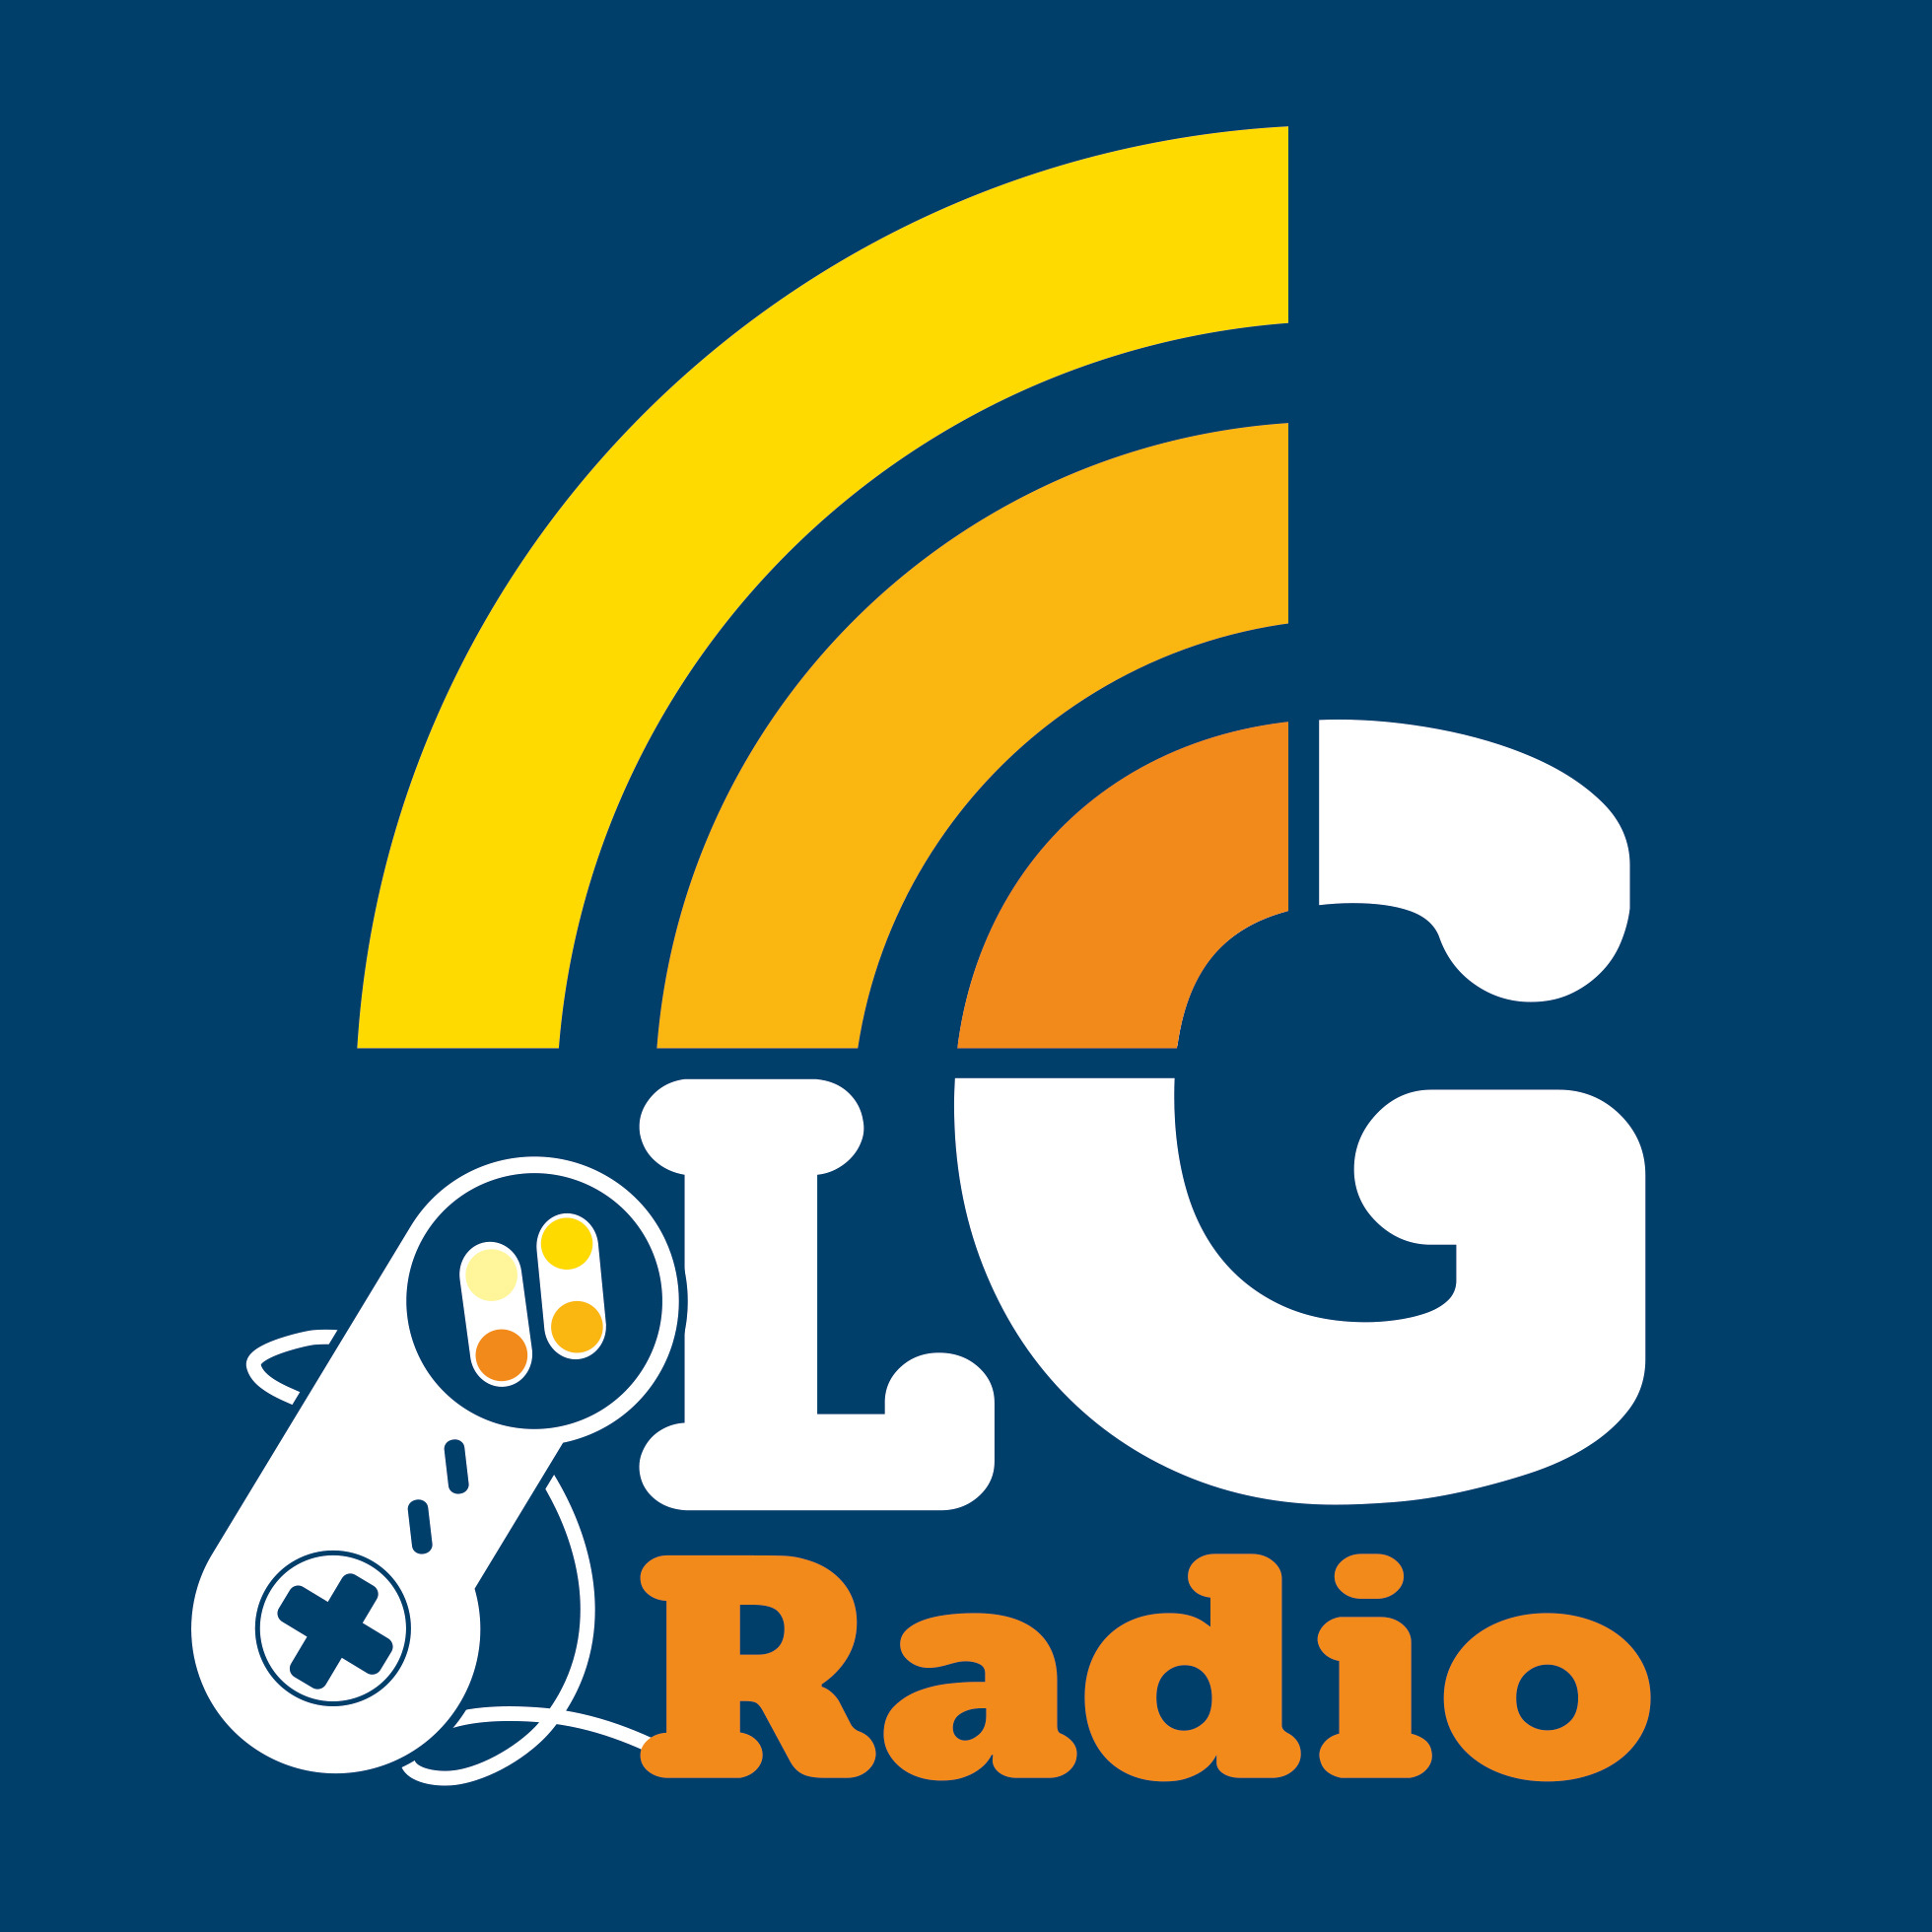 LGR 2016: Episode 19 - Lapsed News XIV